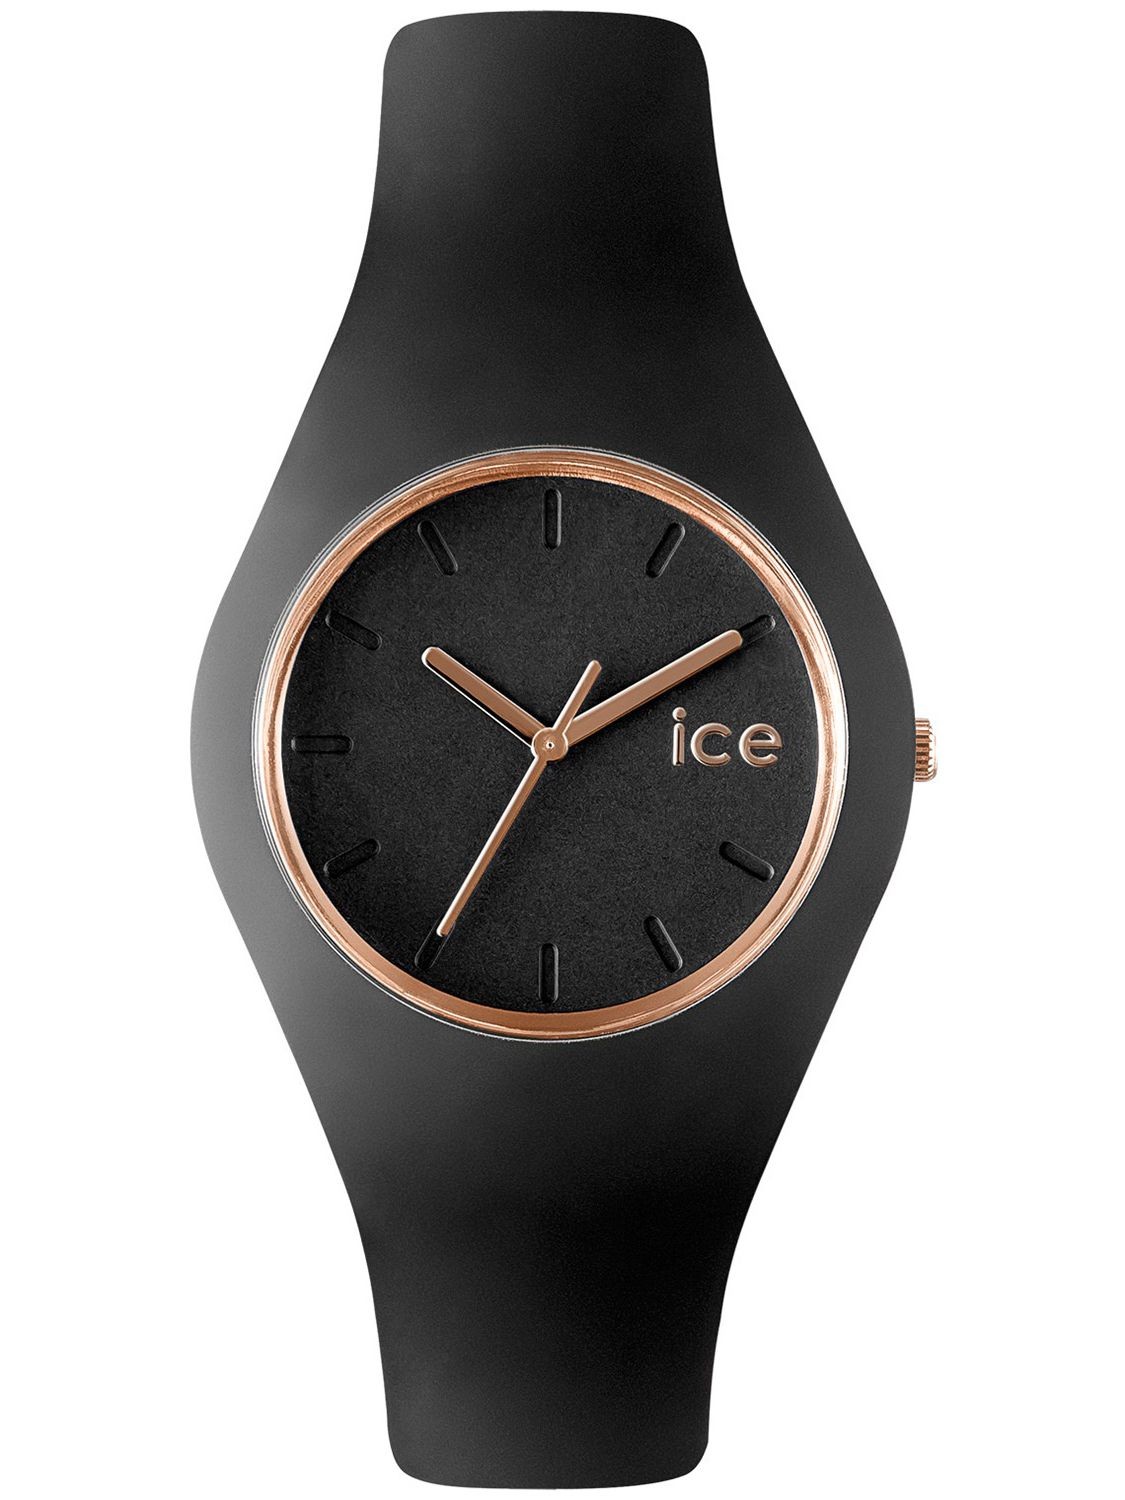 Часы айс. Часы айс вотч. Часы Ice Quartz. Ice watch - glitter - Black '001355. Ice часы женские.